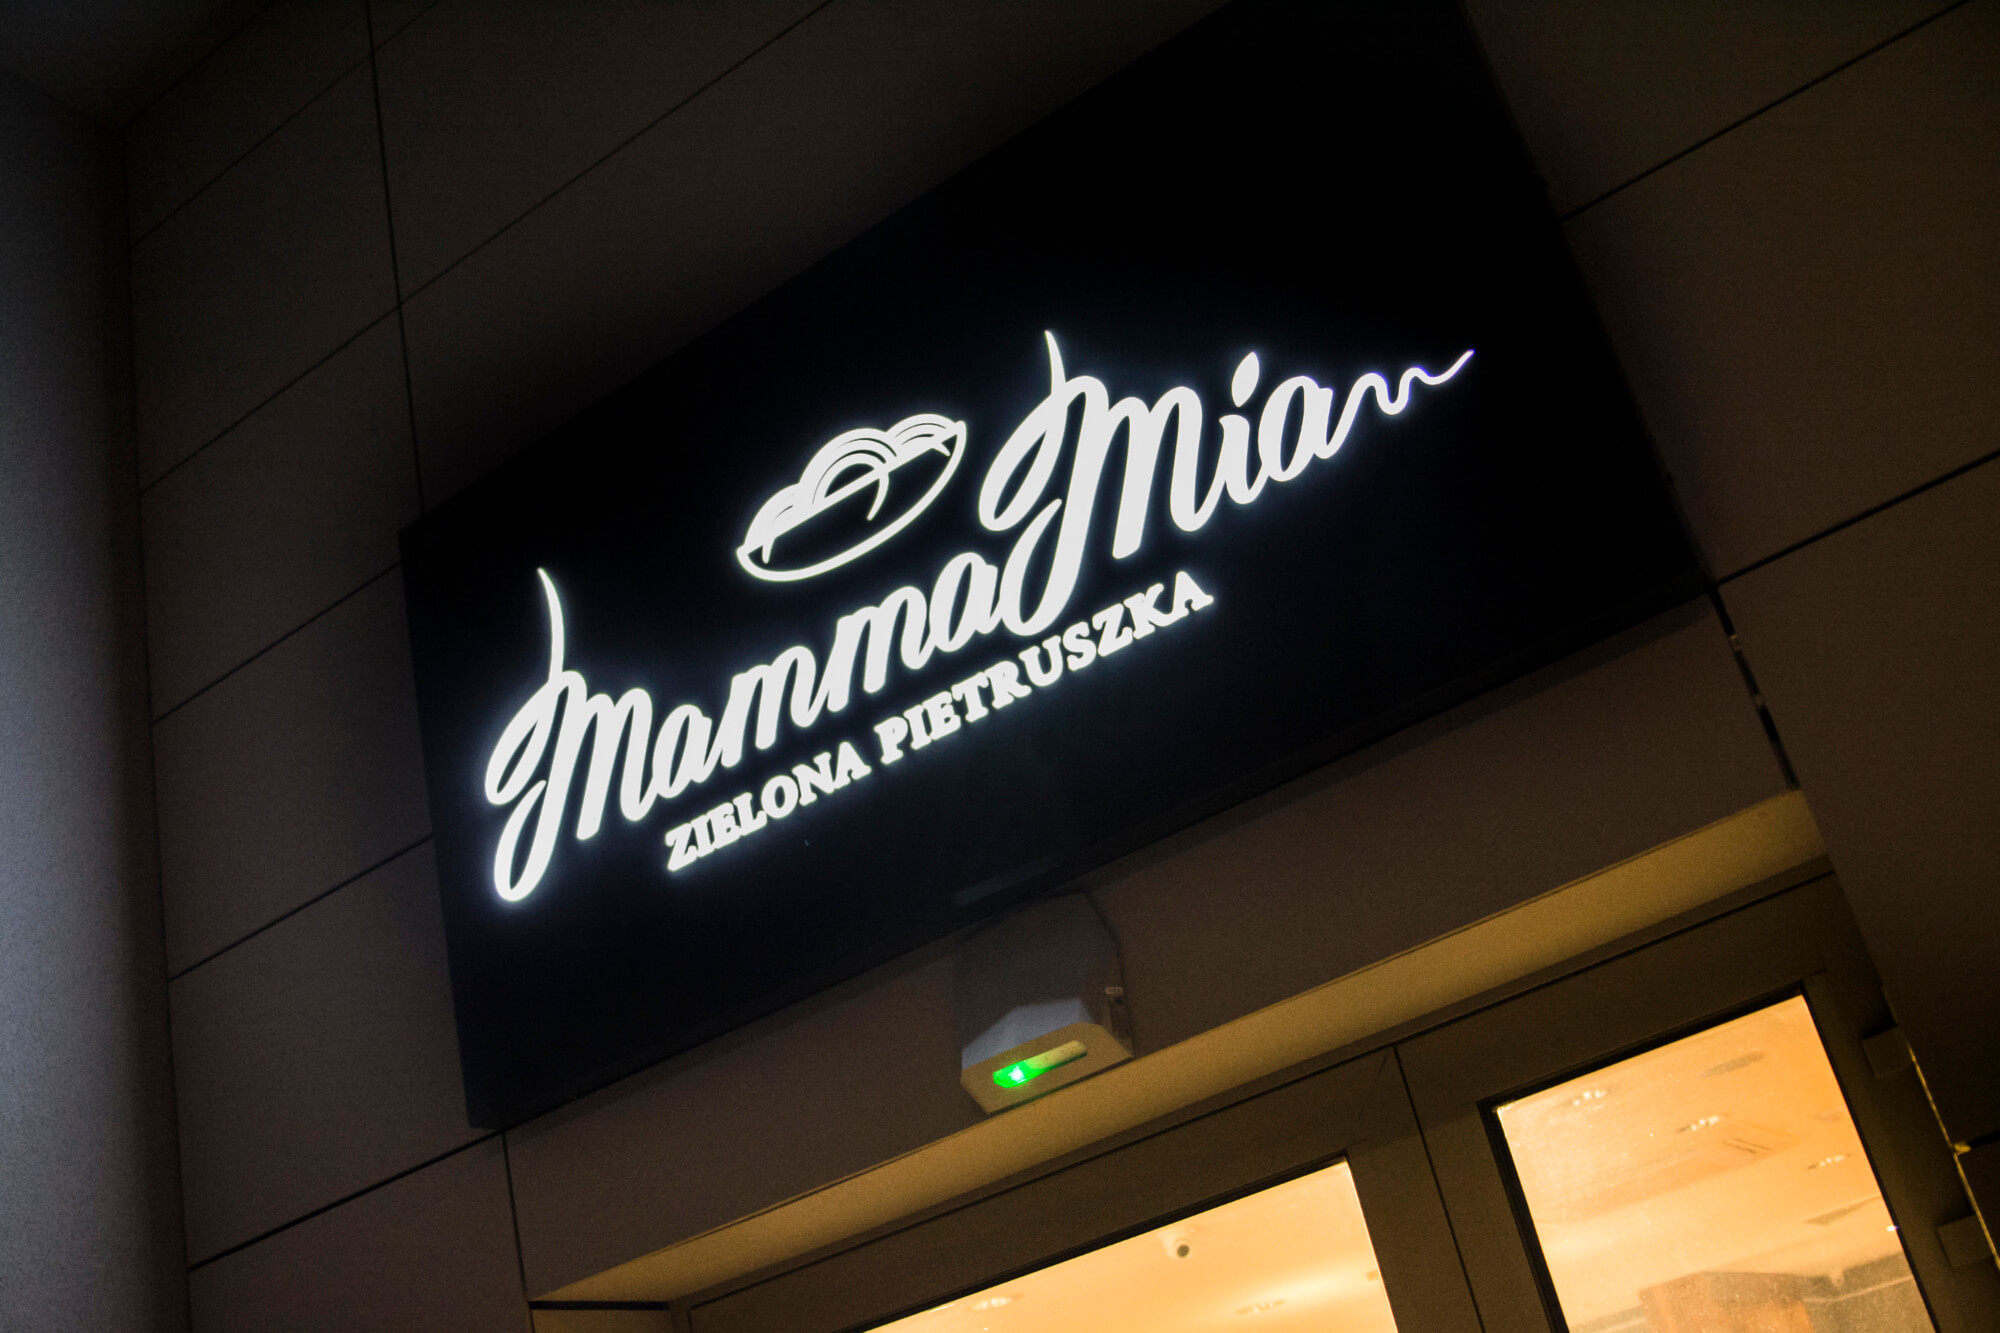 Mamma Mia - Mamma Mia - advertising light box placed over the entrance